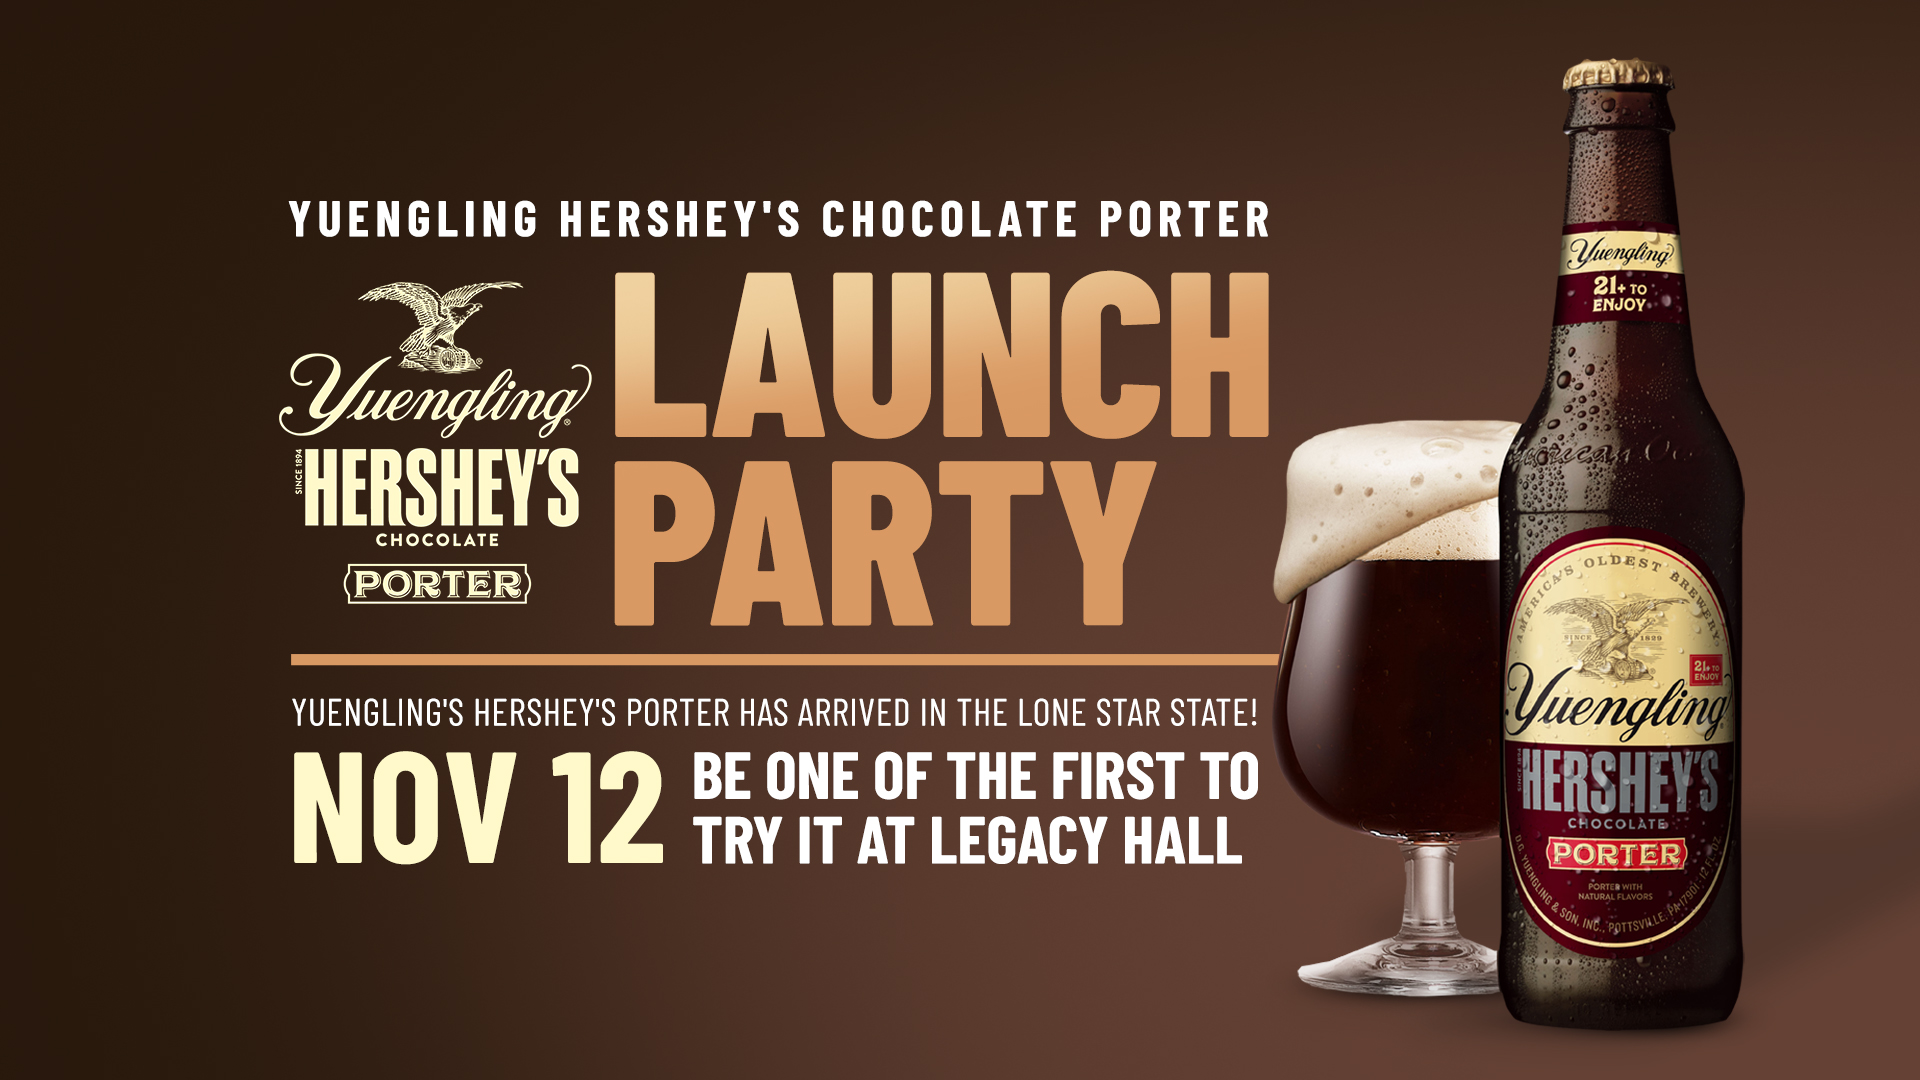 Yuengling’s Hershey’s Chocolate Porter Launch Party - hero